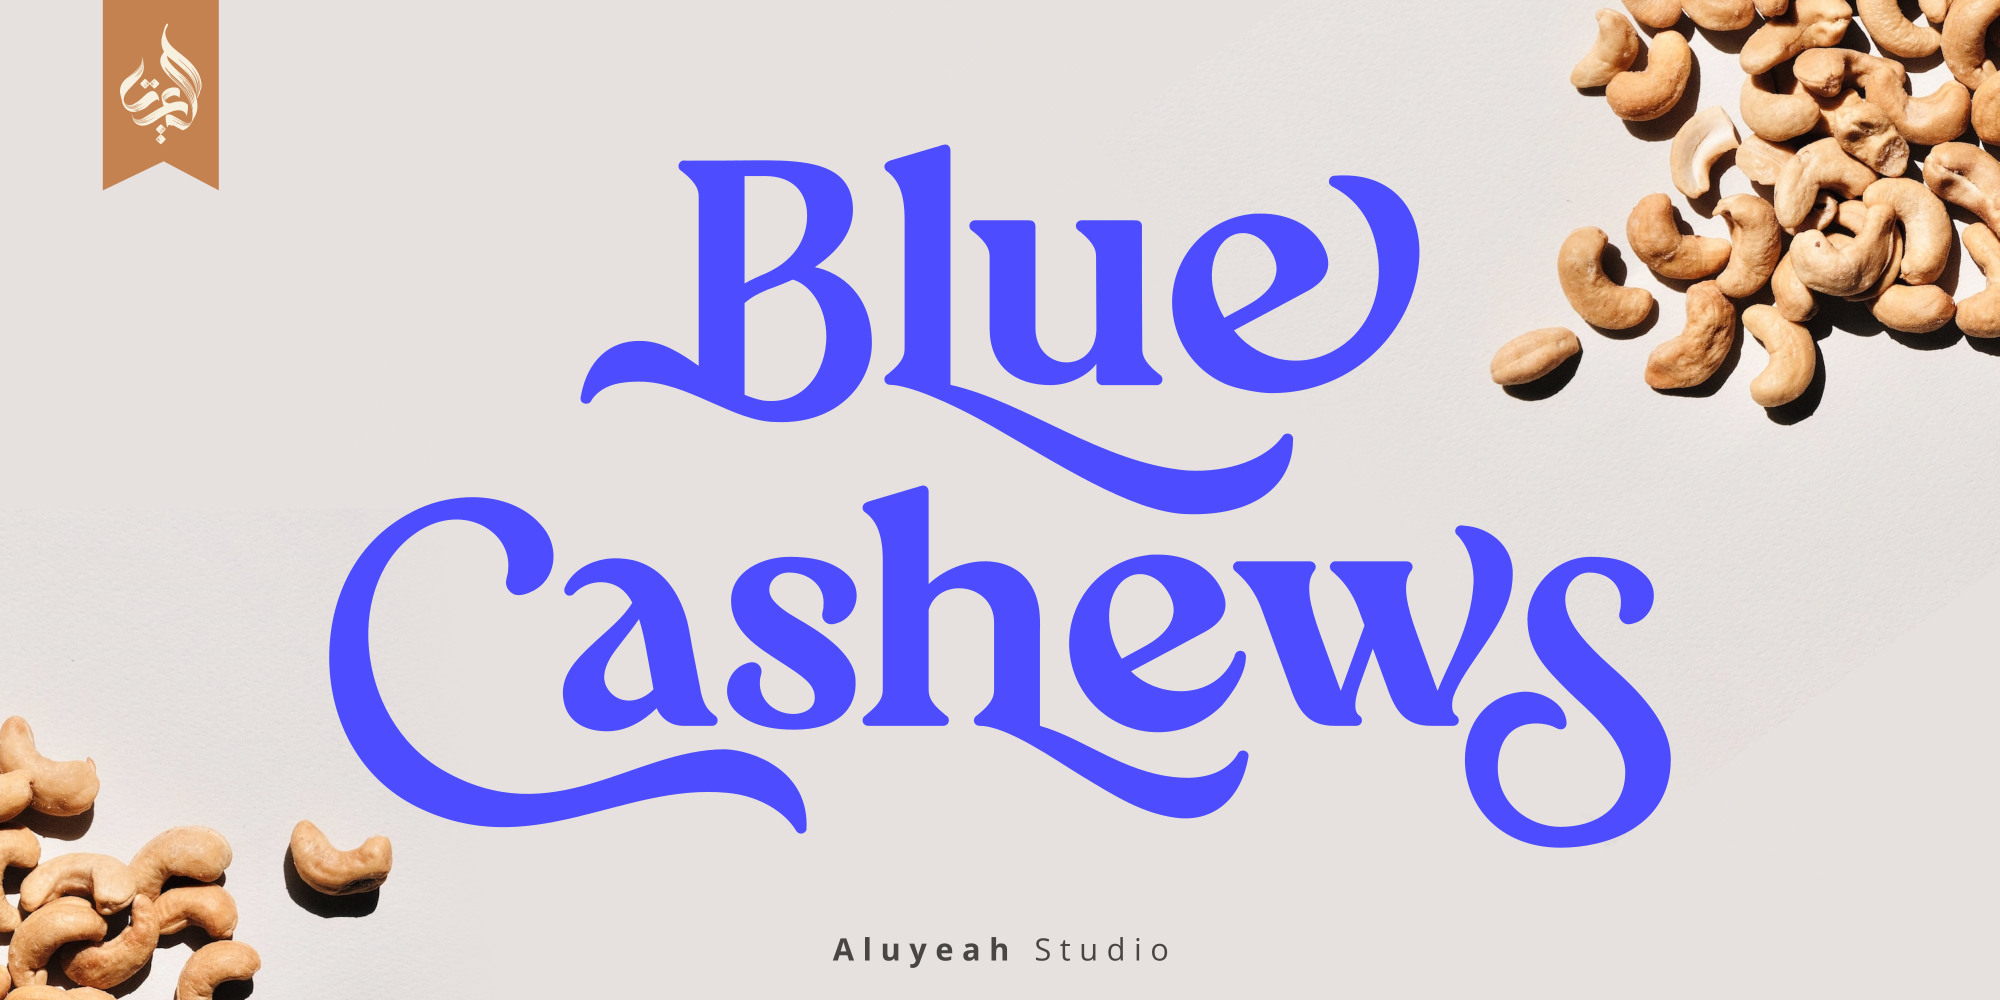 Blue Cashews